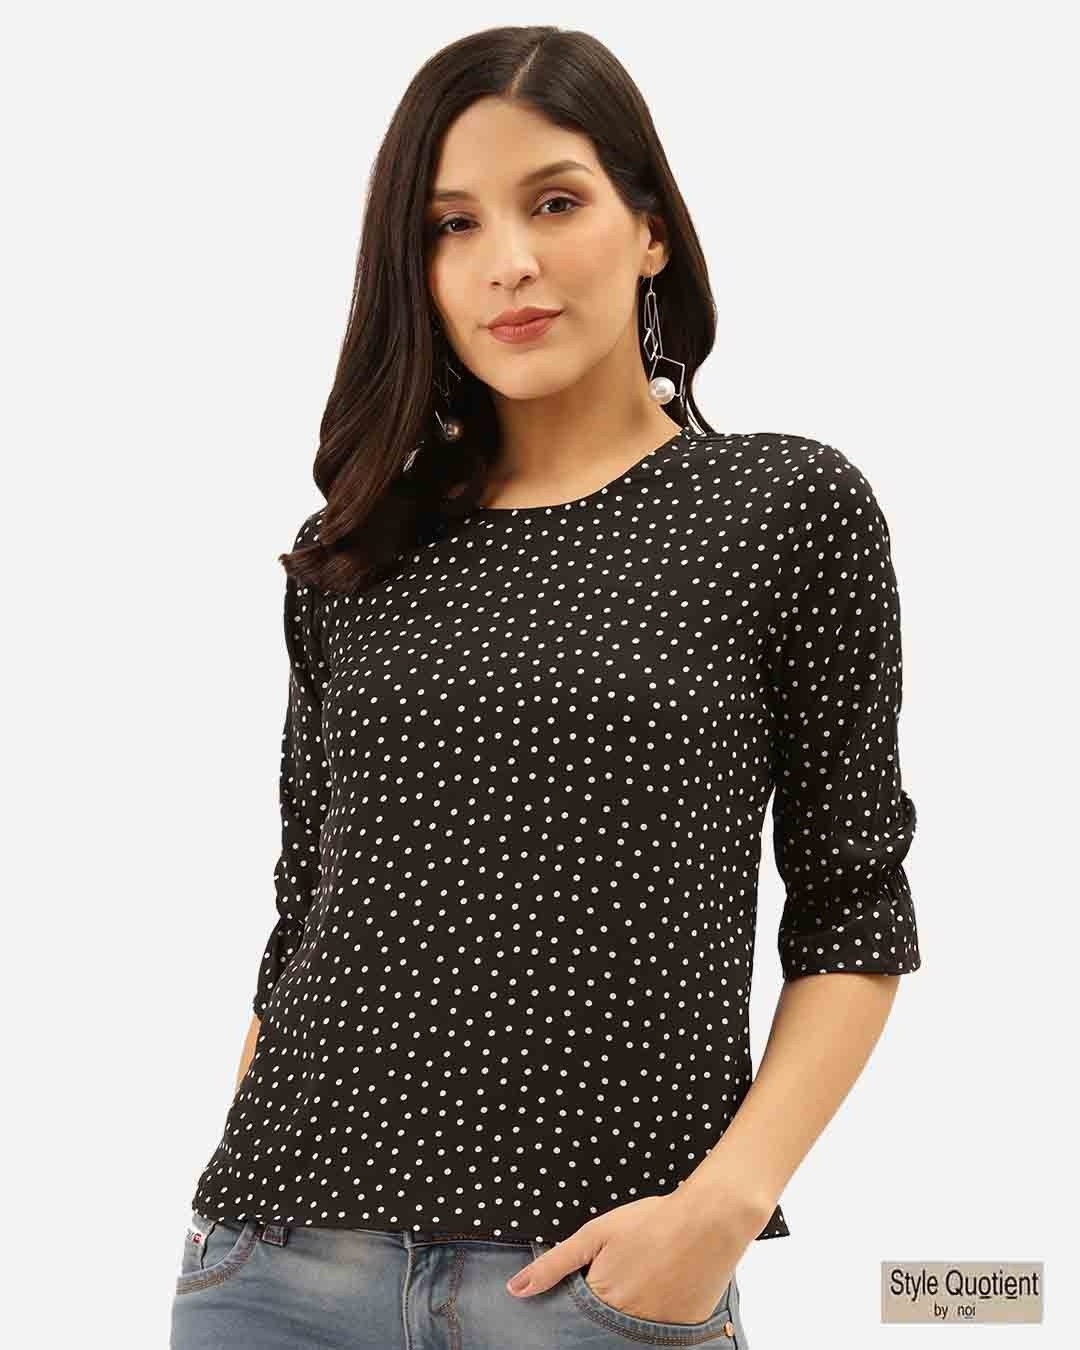 Buy Style Quotient Women Black & White Polka Dot Print Regular Top for ...